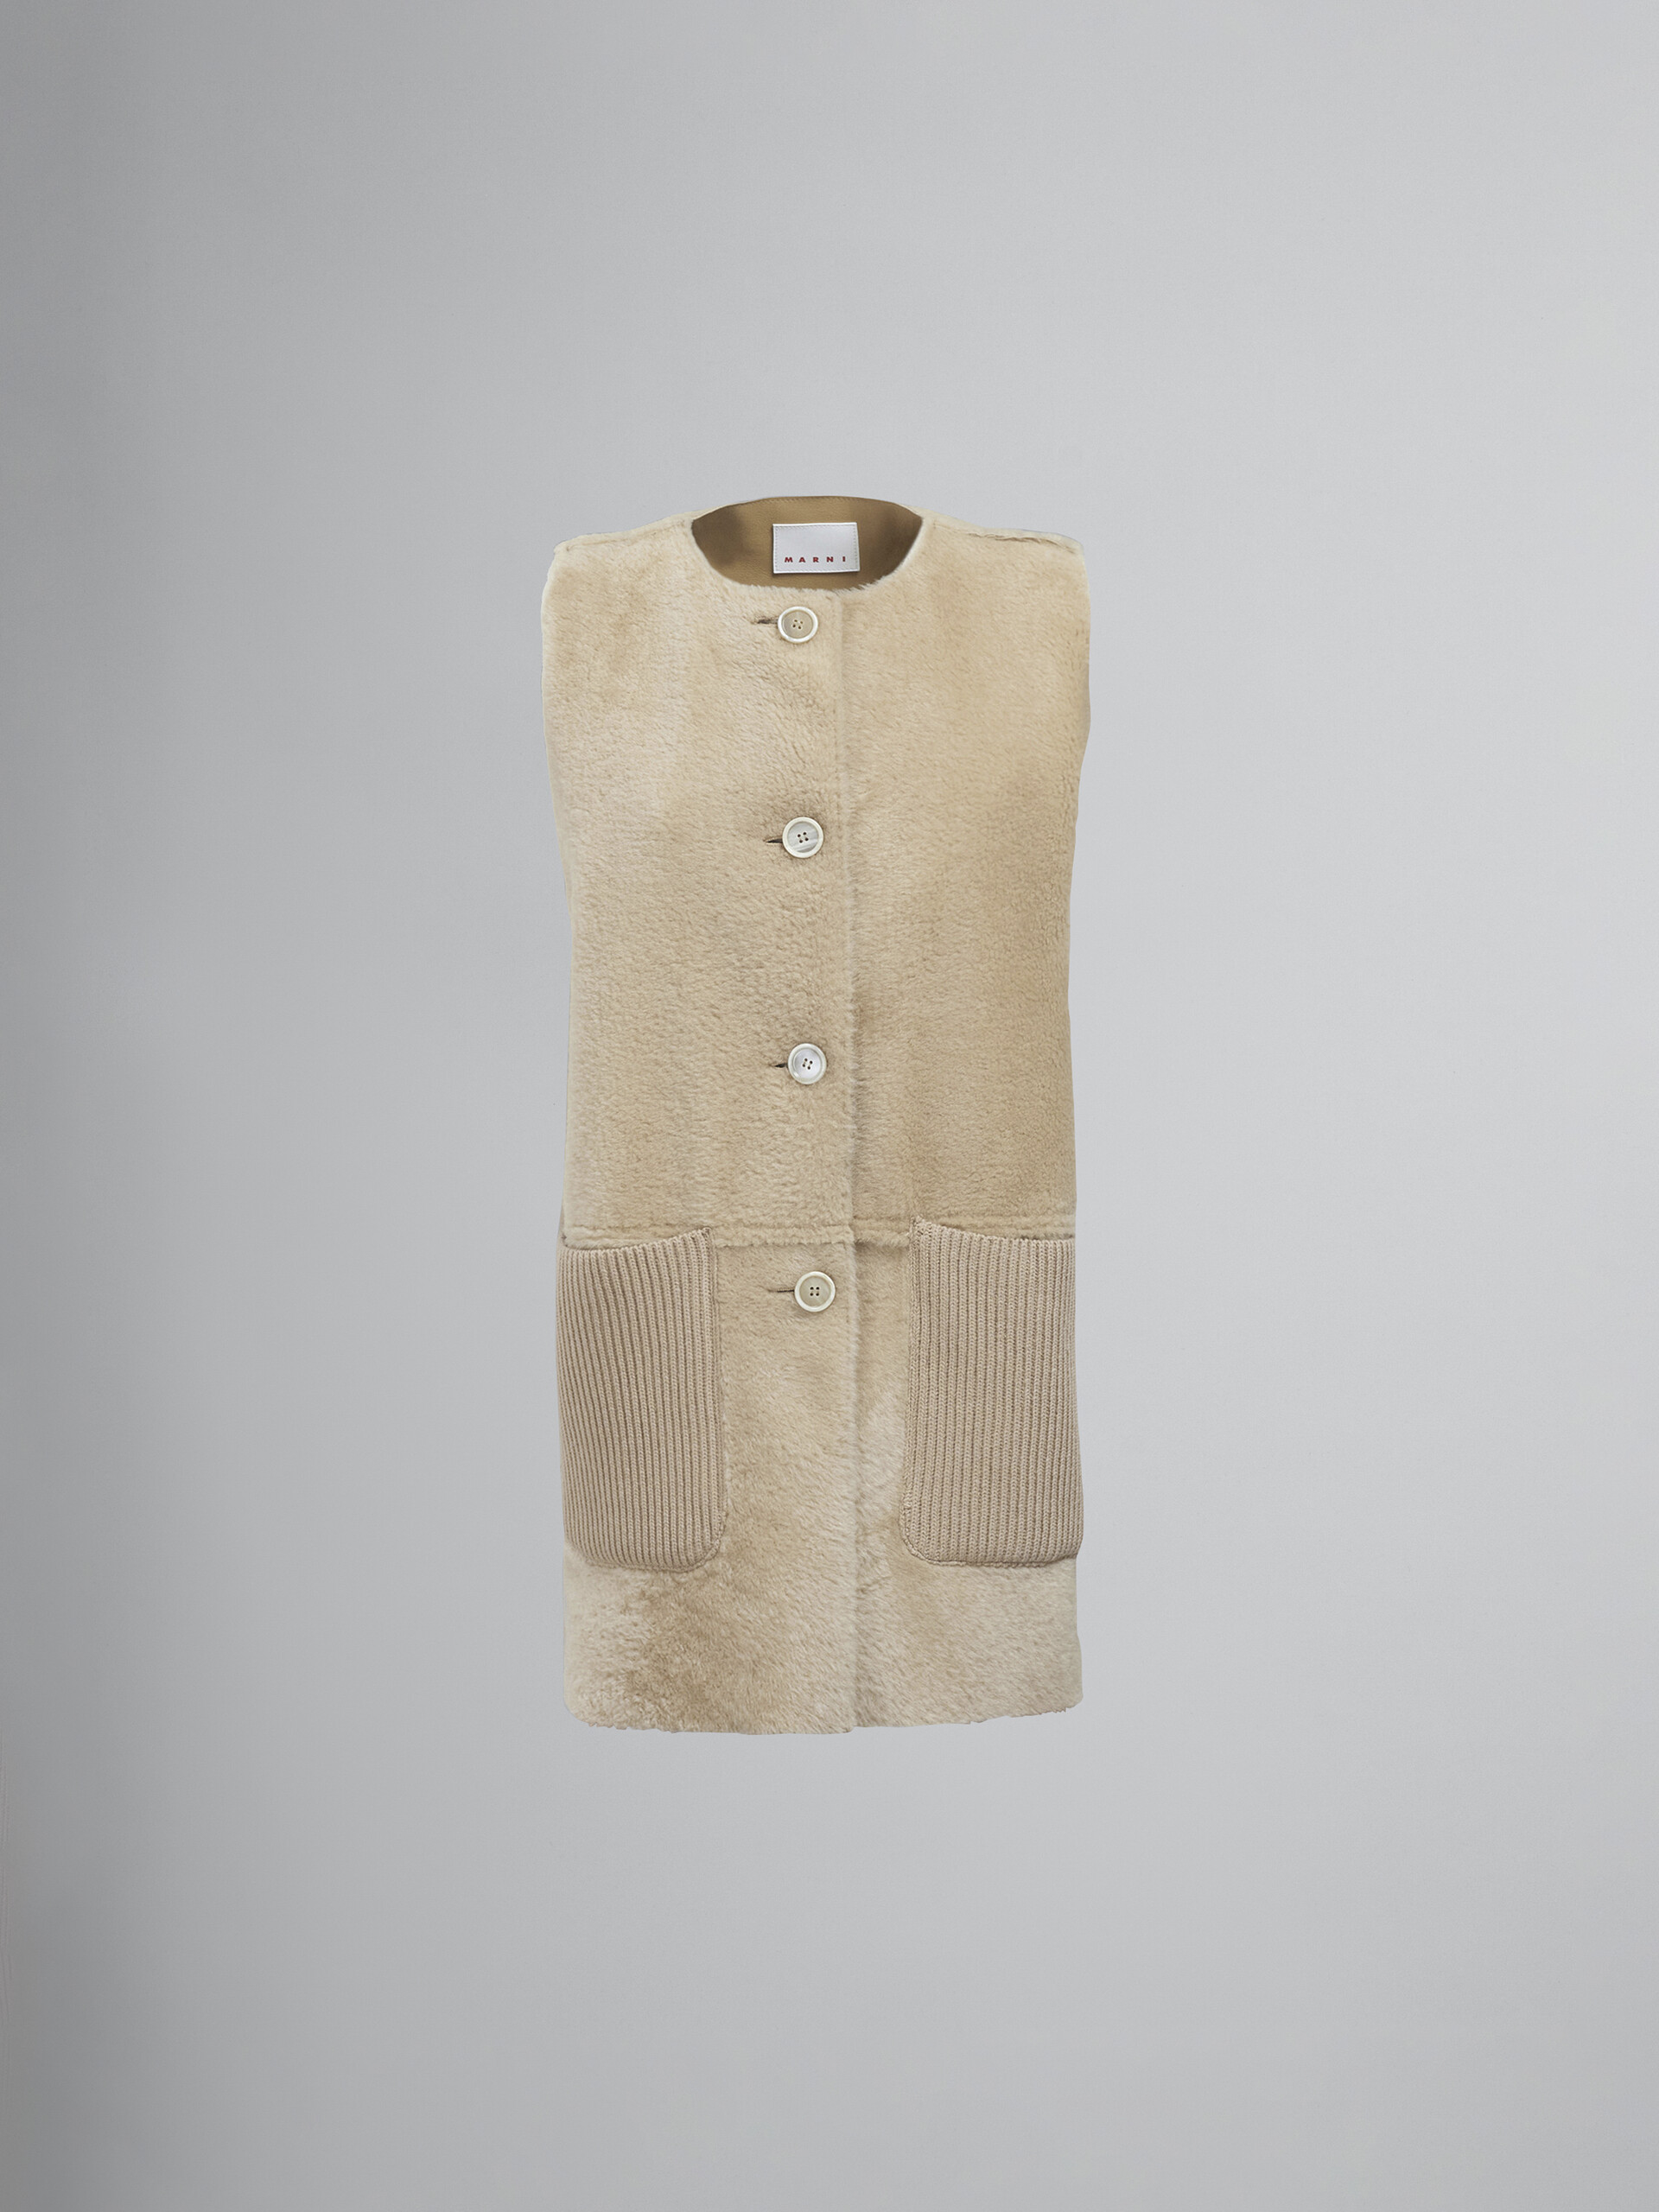 Chaleco de terciopelo de lana merina ligera reversible - Chaleco - Image 1